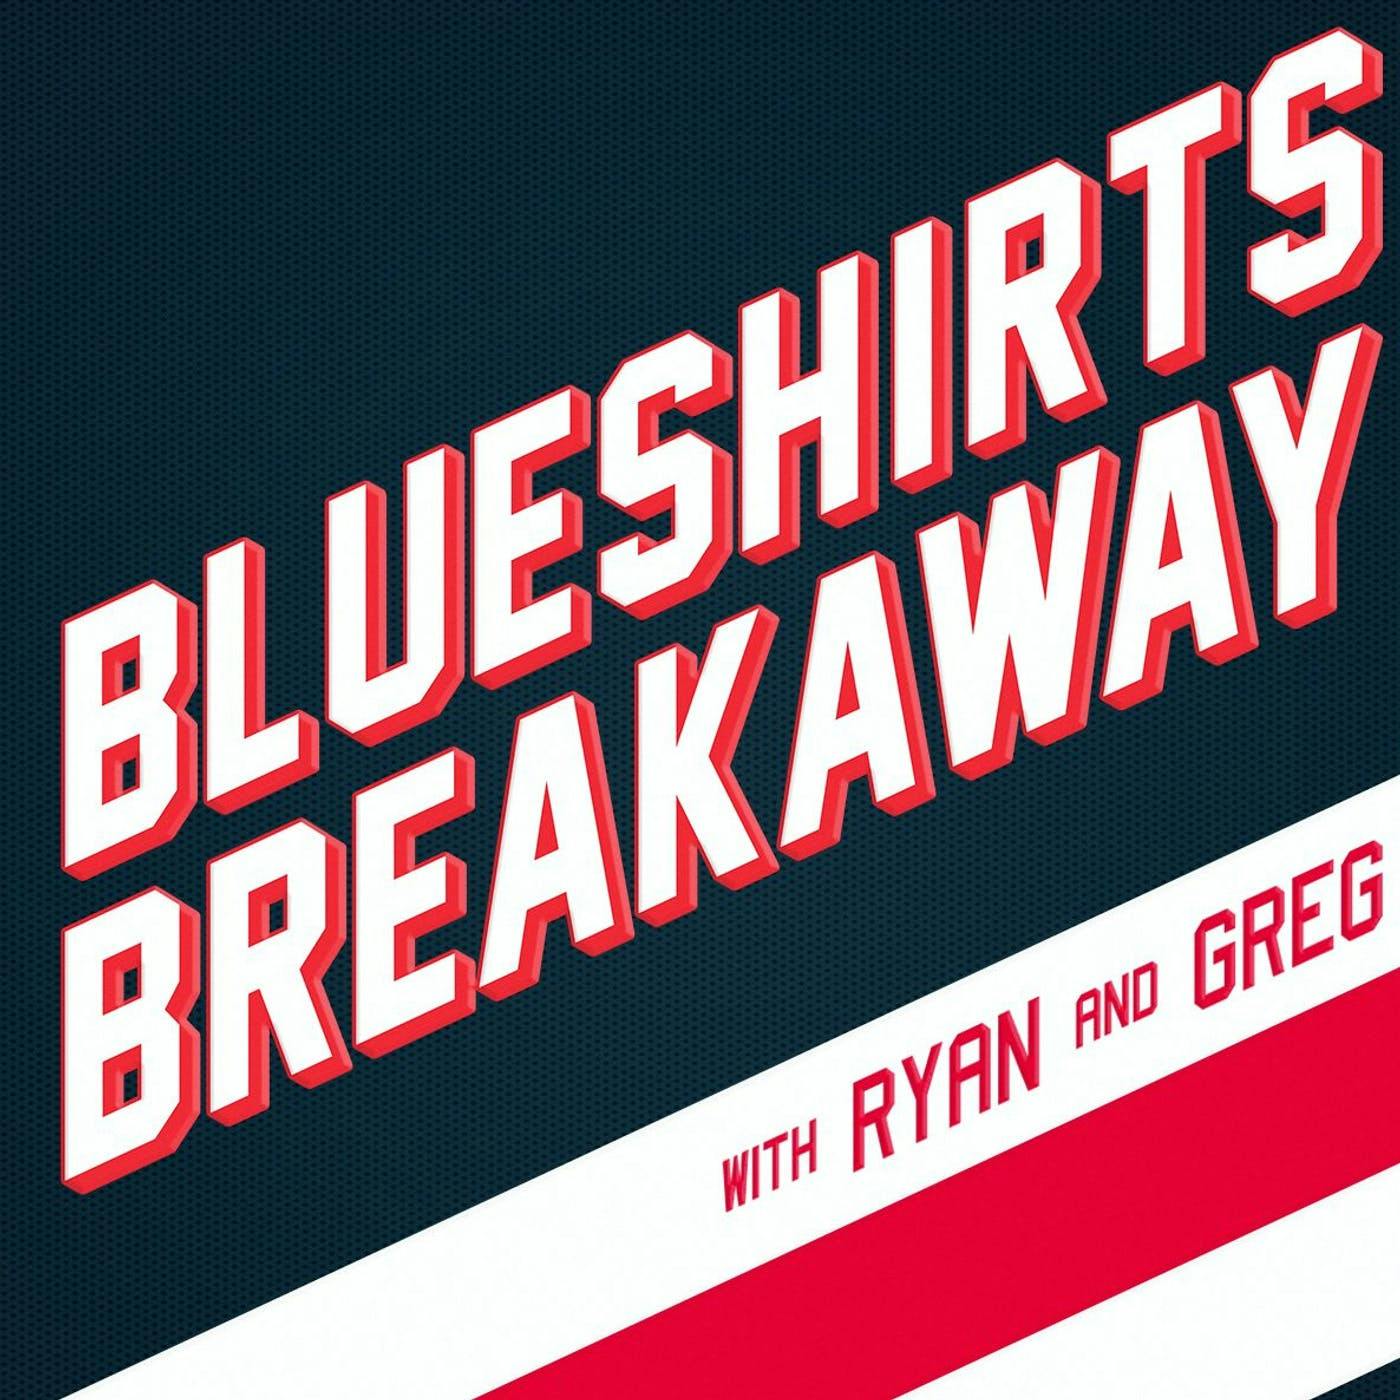 Blueshirts Breakaway Bonus - MLB Over/Unders